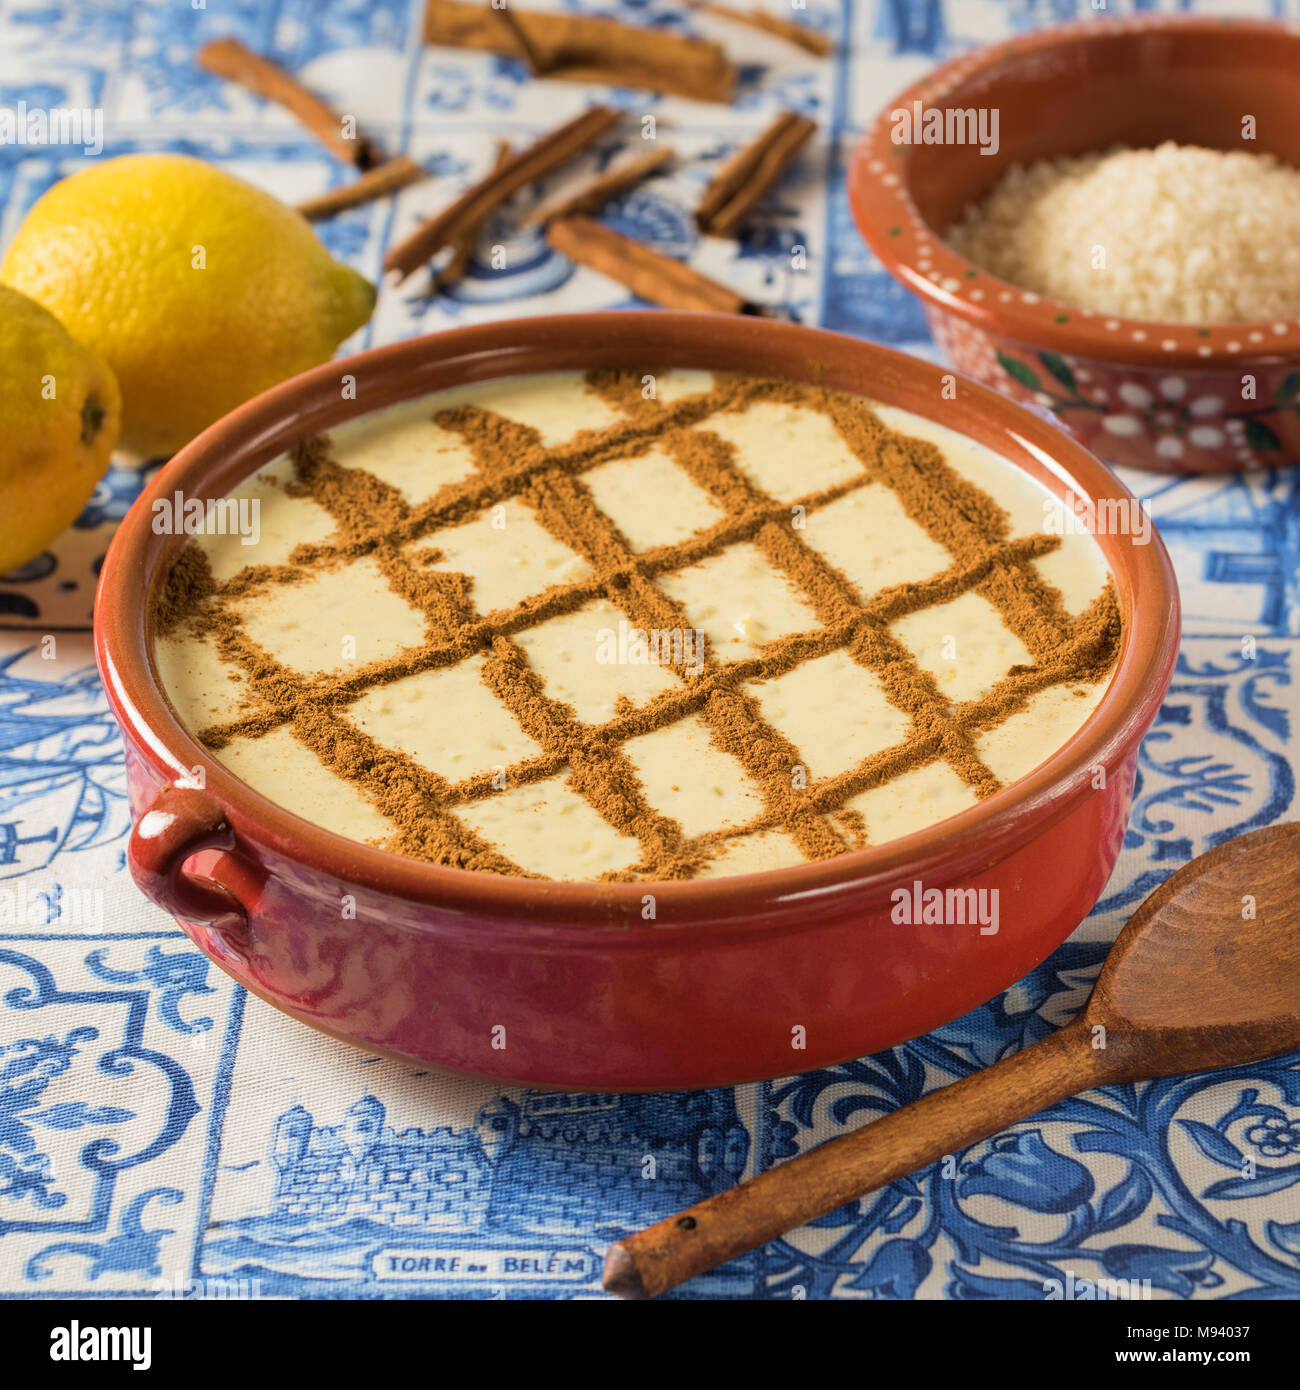 Arroz doce. Portuguese rice pudding. Portugal Food Stock Photo ...